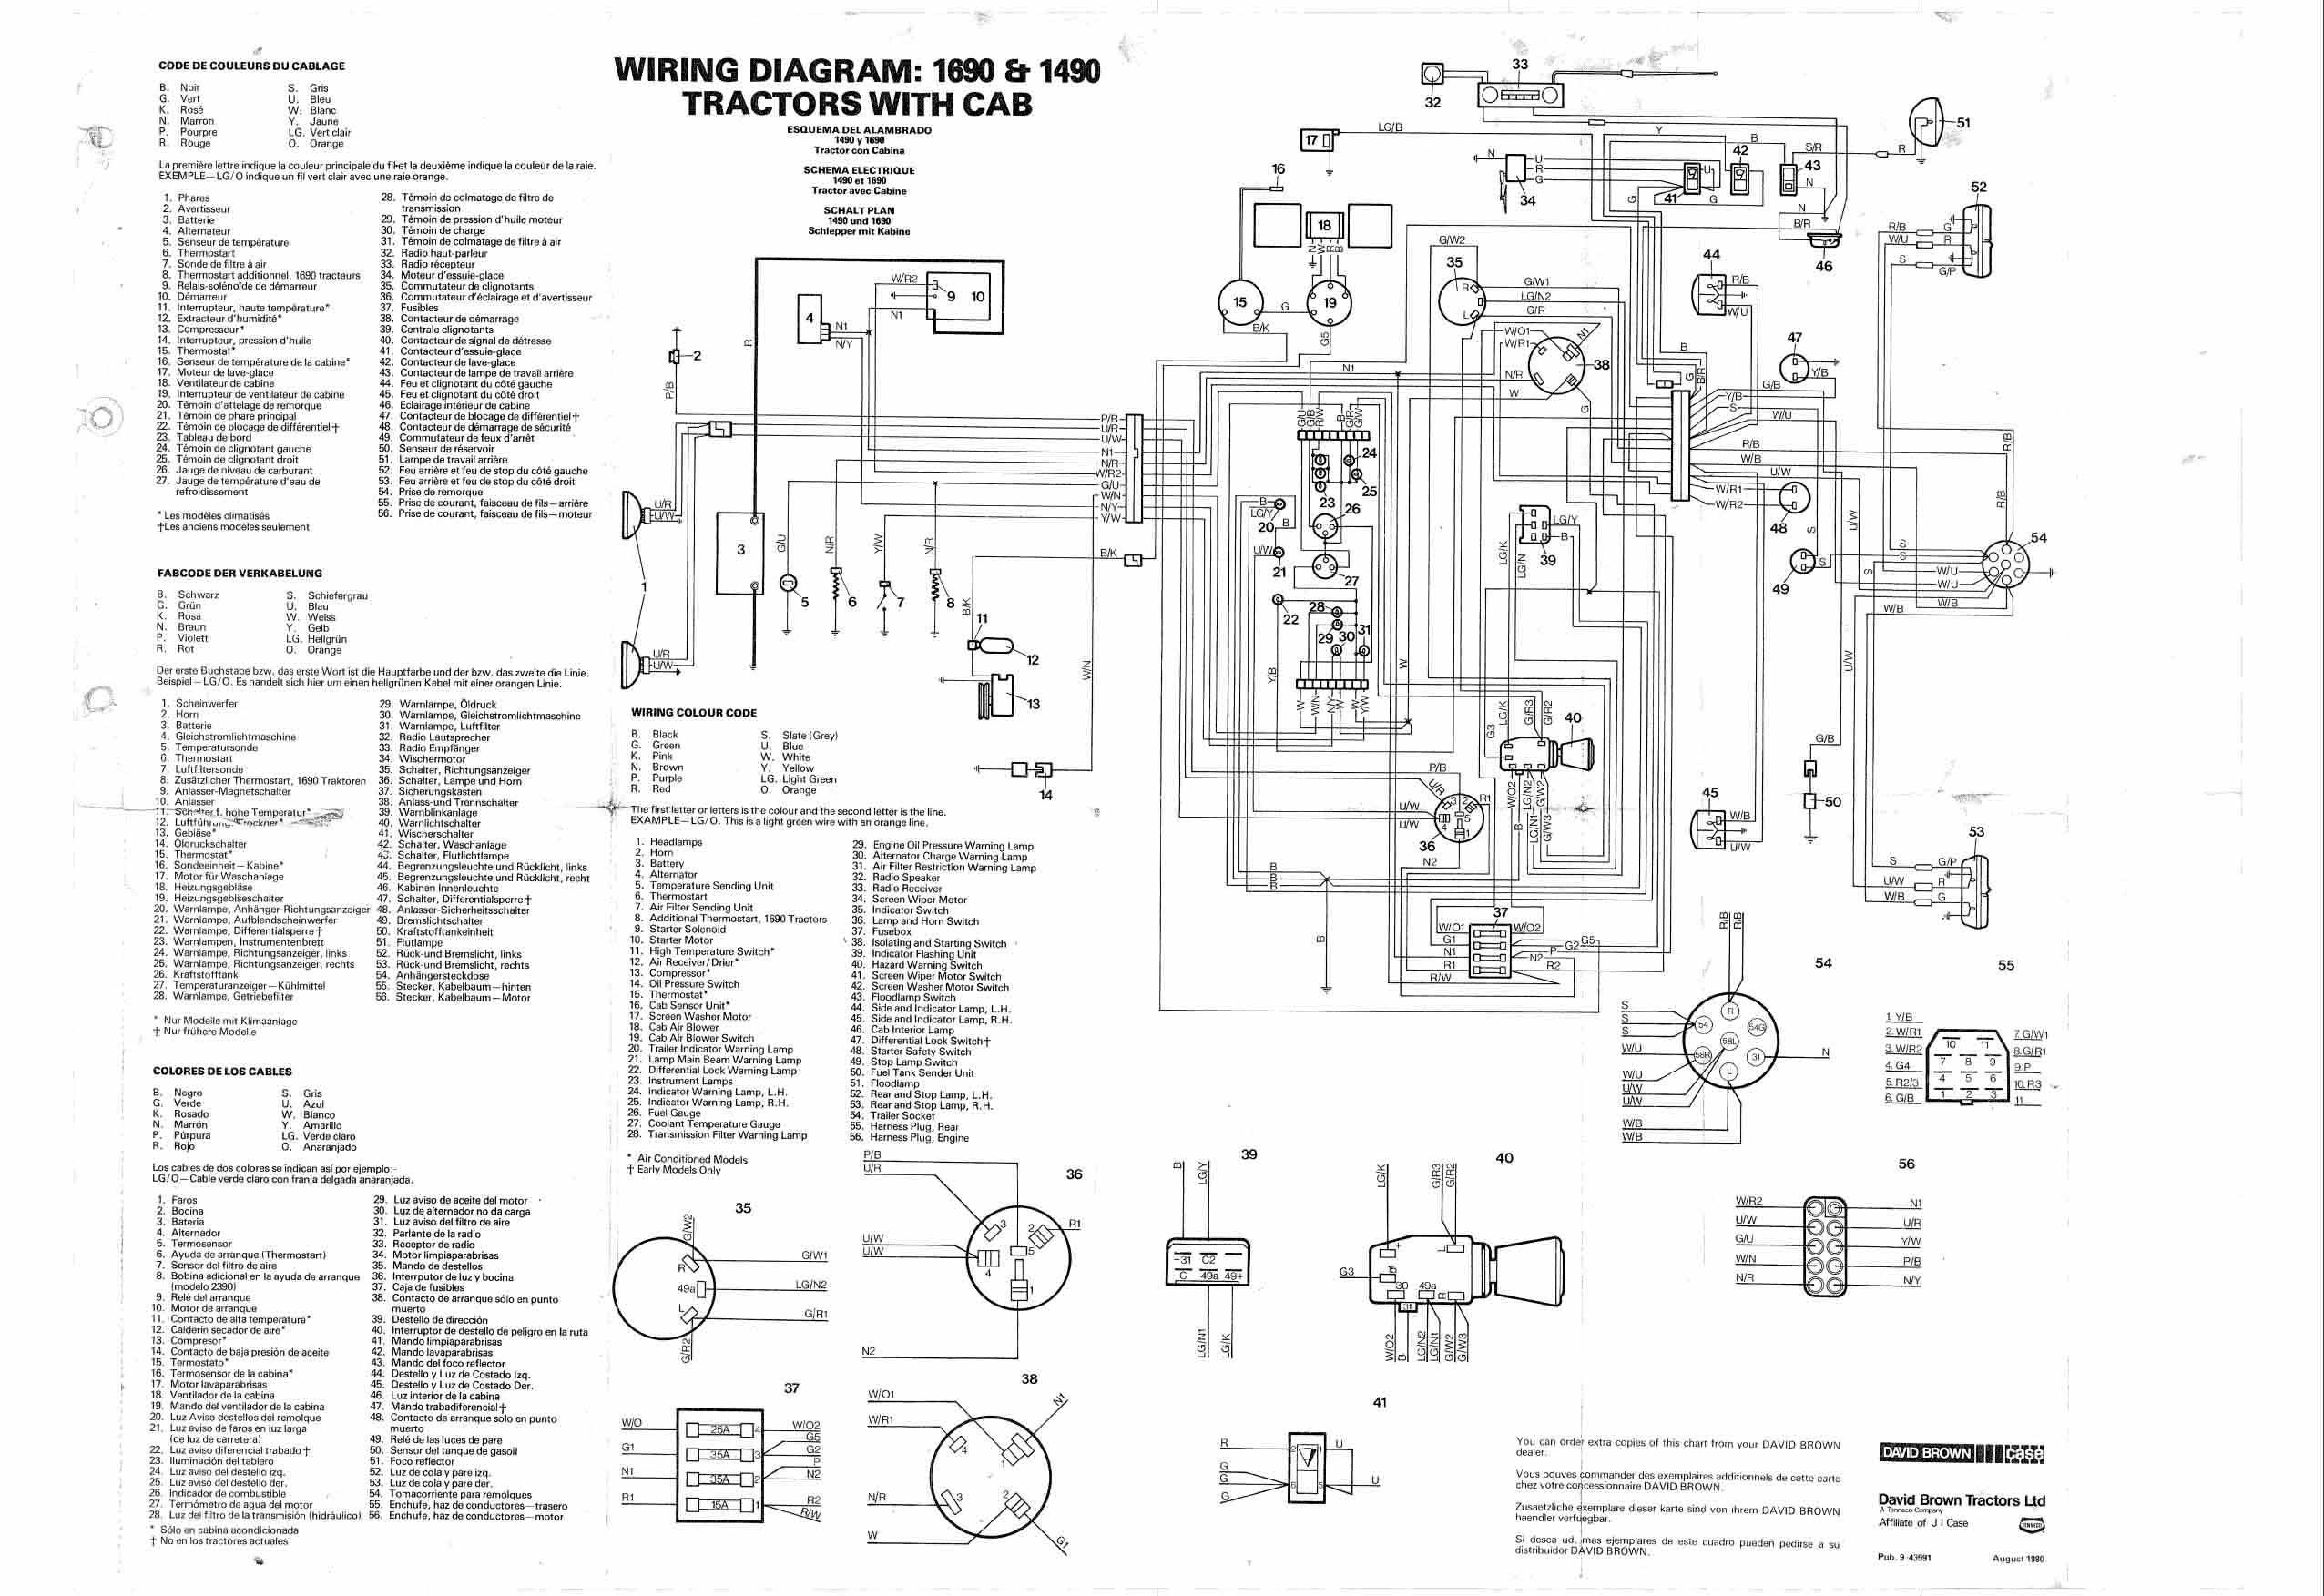 Org Ih Wiring Diagram 92 Diagrams Electrical 1066 Harness 806 986 Mtd Wiring Diagram Case 444 Wiring Diagram